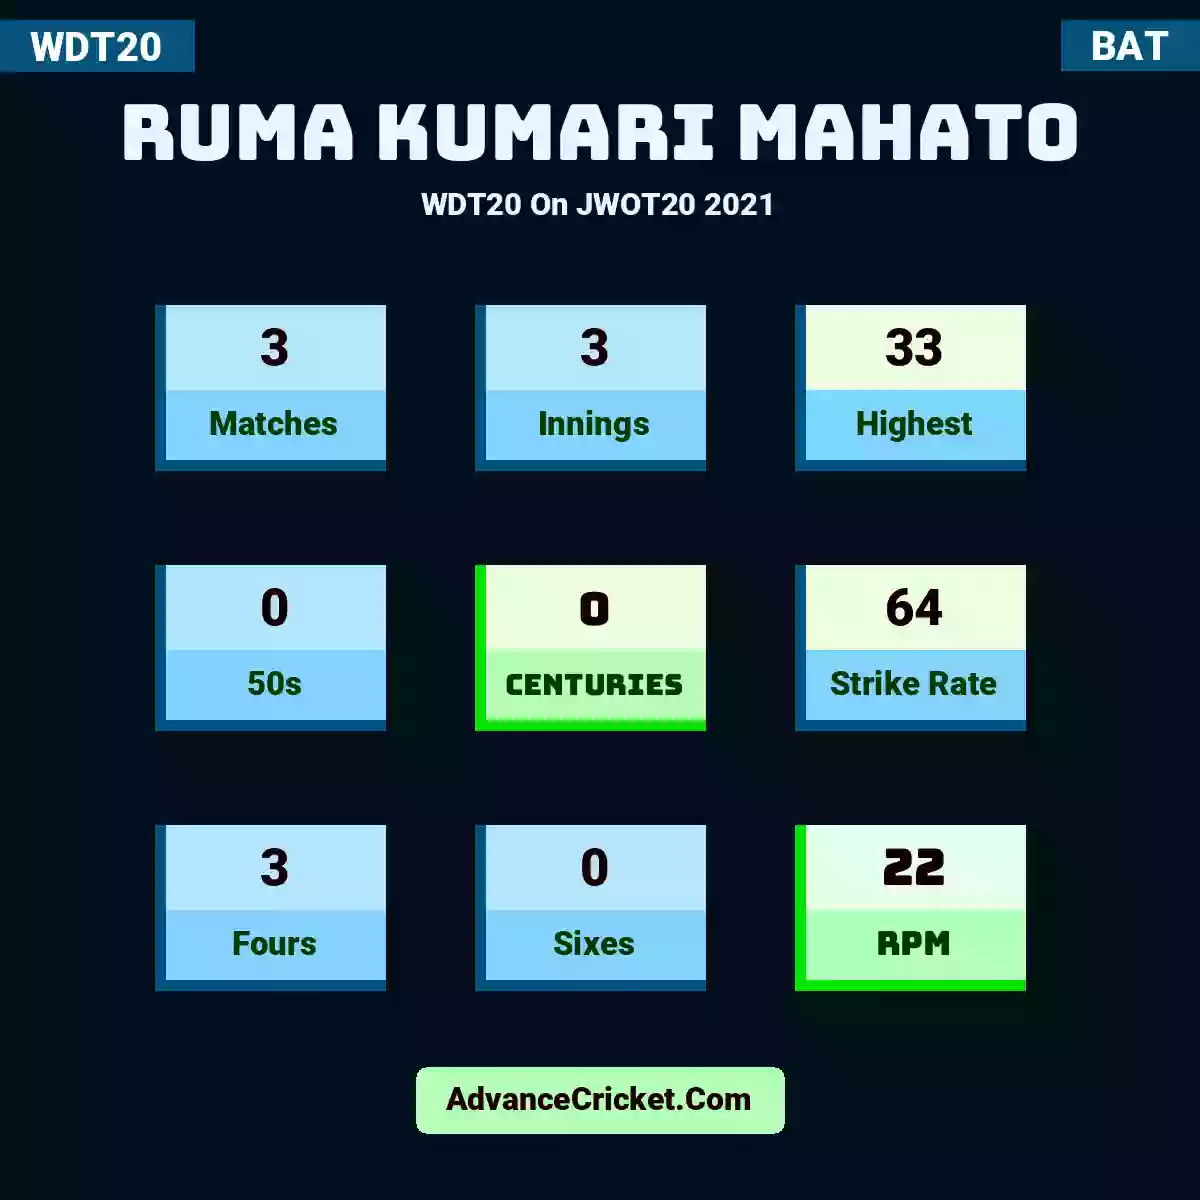 Ruma Kumari Mahato WDT20  On JWOT20 2021, Ruma Kumari Mahato played 3 matches, scored 33 runs as highest, 0 half-centuries, and 0 centuries, with a strike rate of 64. R.Kumari Mahato hit 3 fours and 0 sixes, with an RPM of 22.